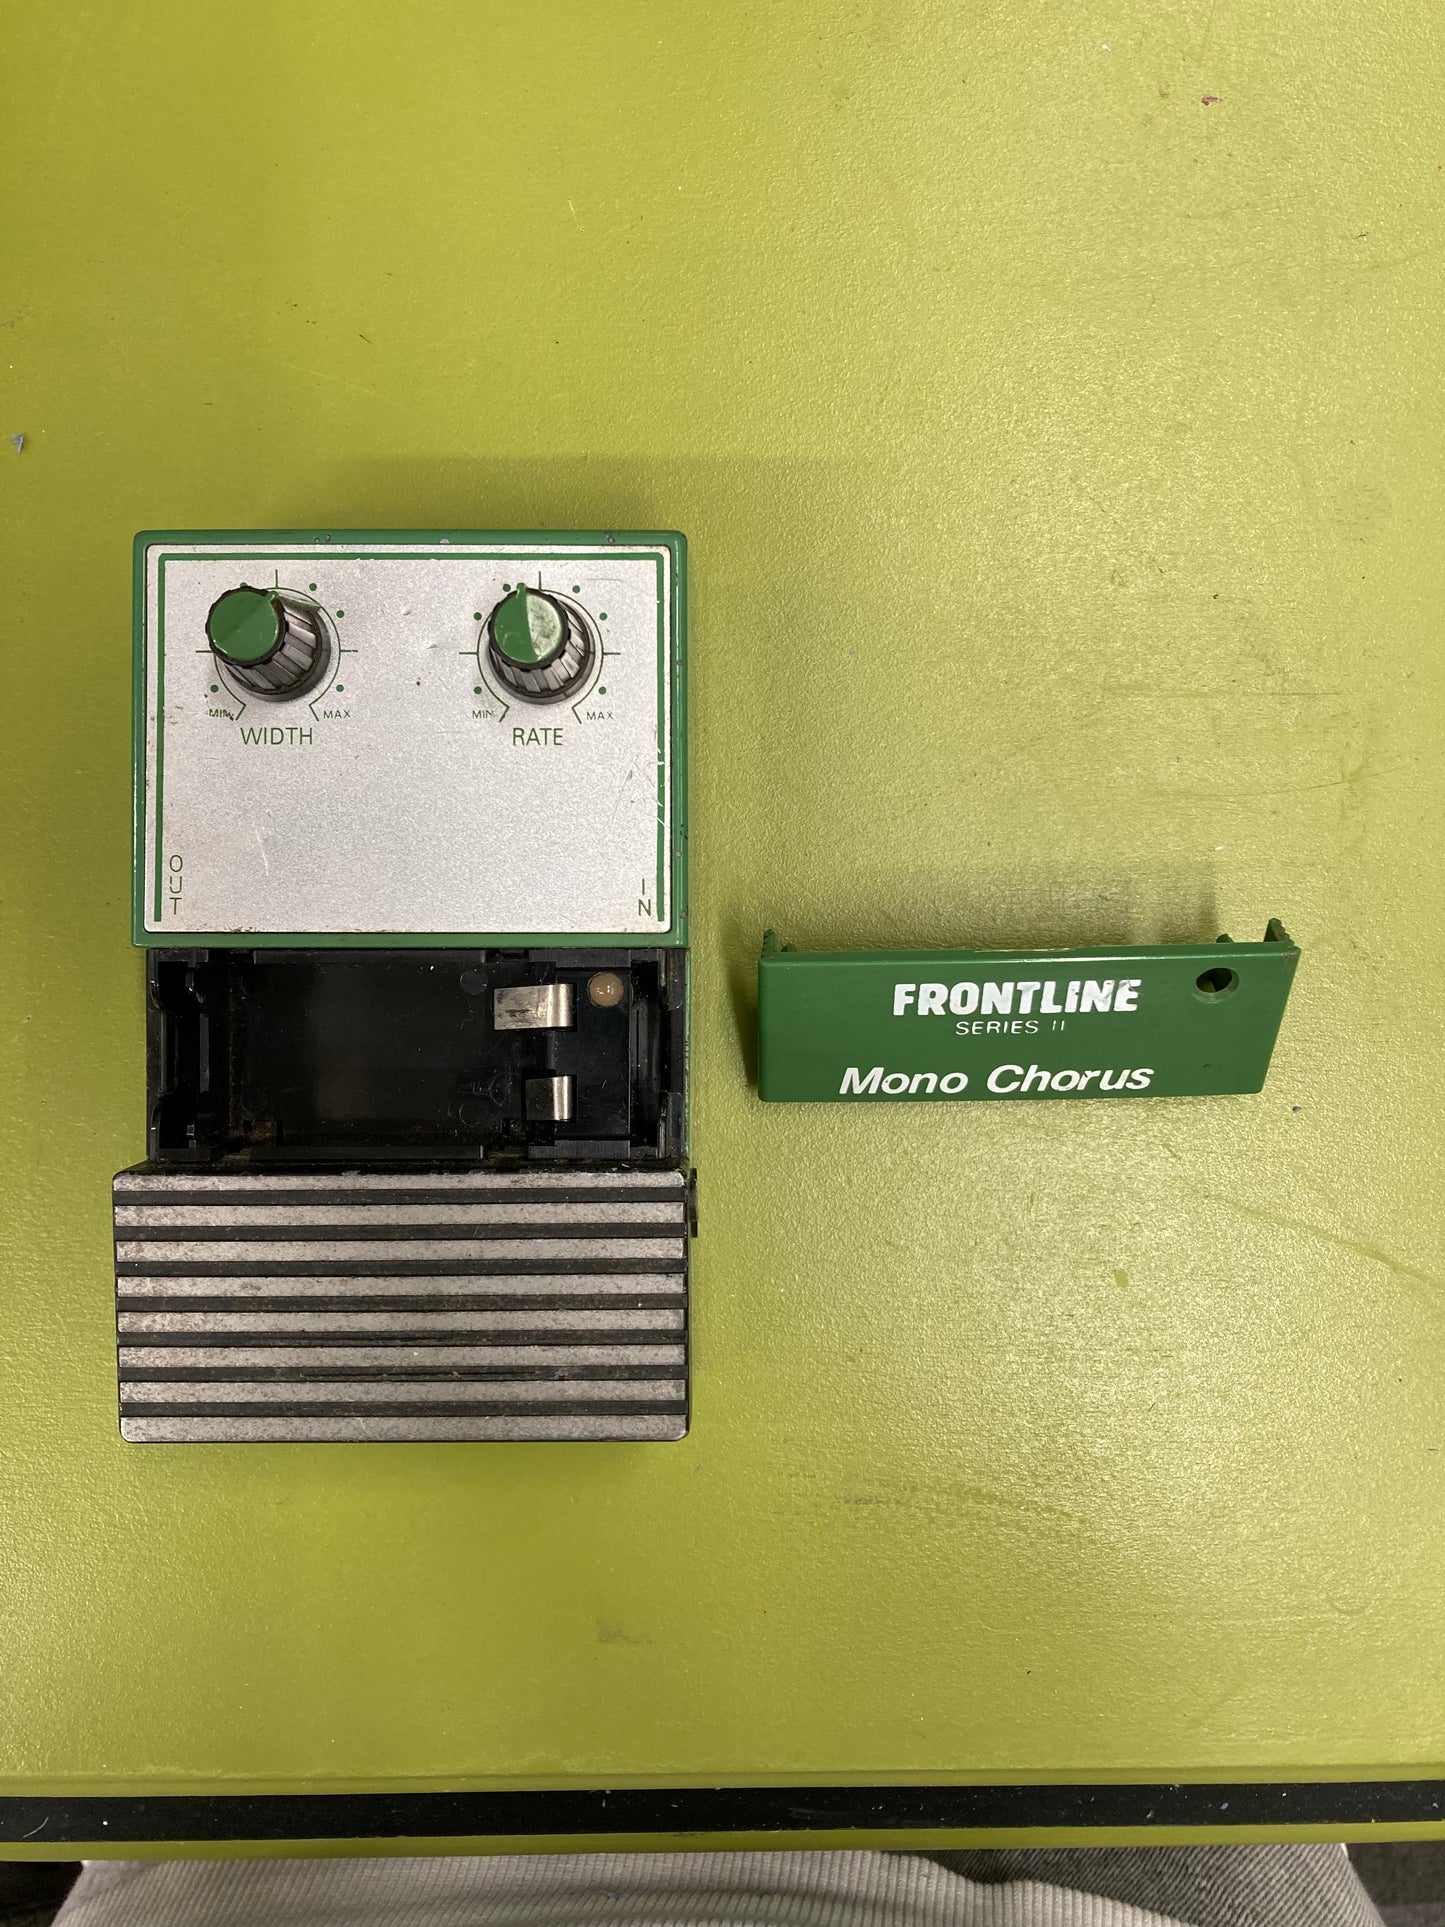 Frontline series II Mono Chorus pedal